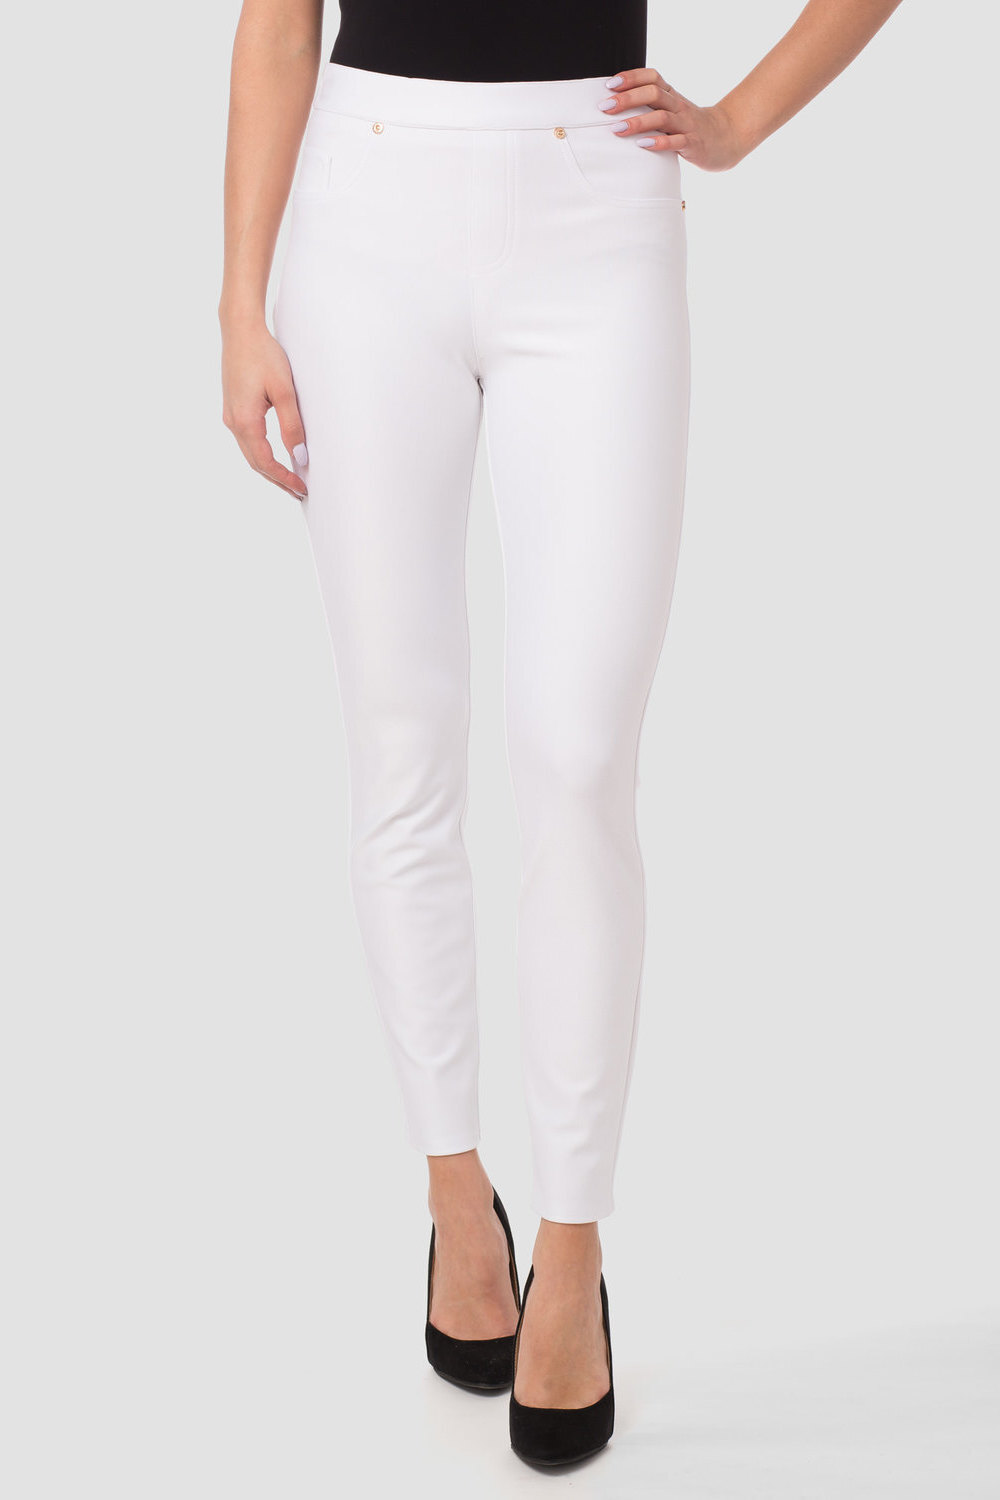 Joseph Ribkoff pantalon style 172460. Blanc